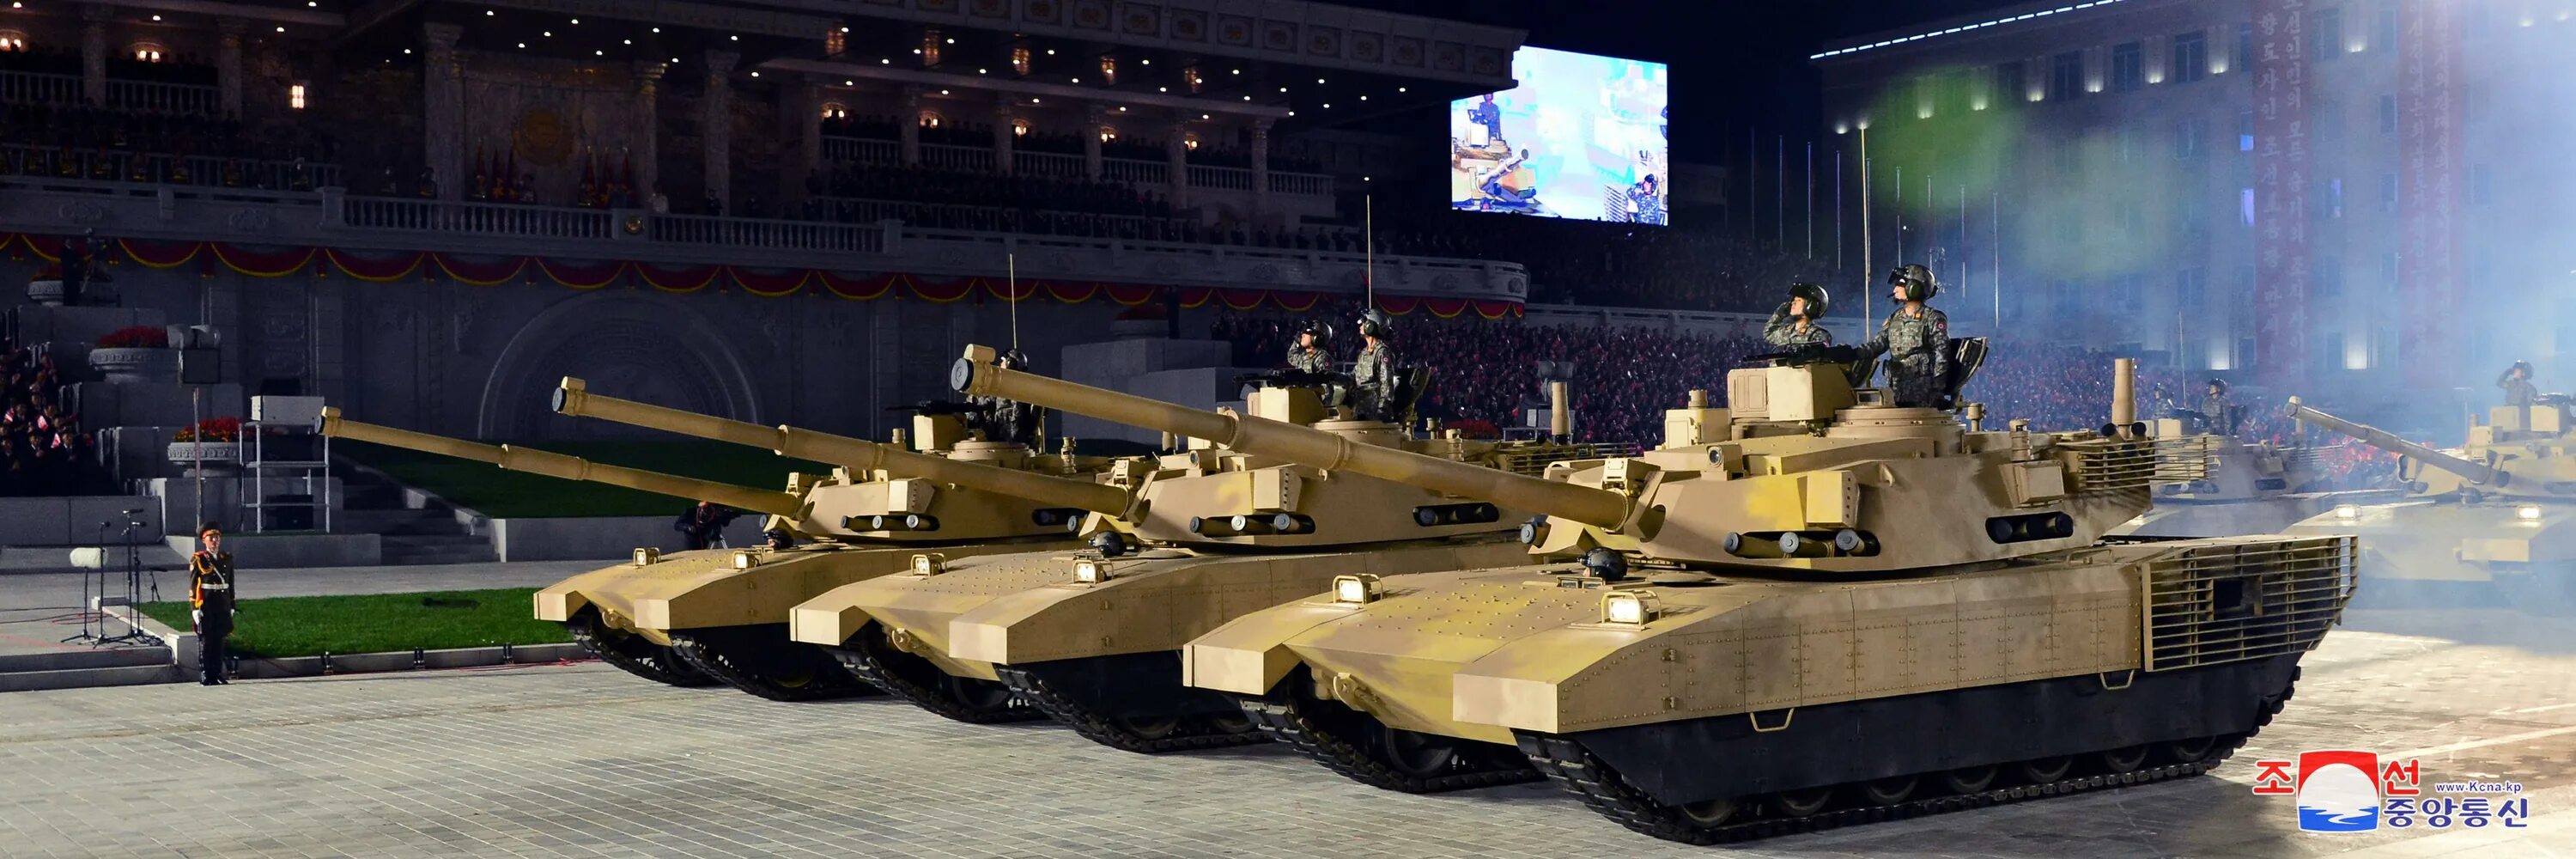 M-2020 MBT North Korea. Танки 2020 КНДР. Северокорейский танк Сонгун-915. Новый танк КНДР.